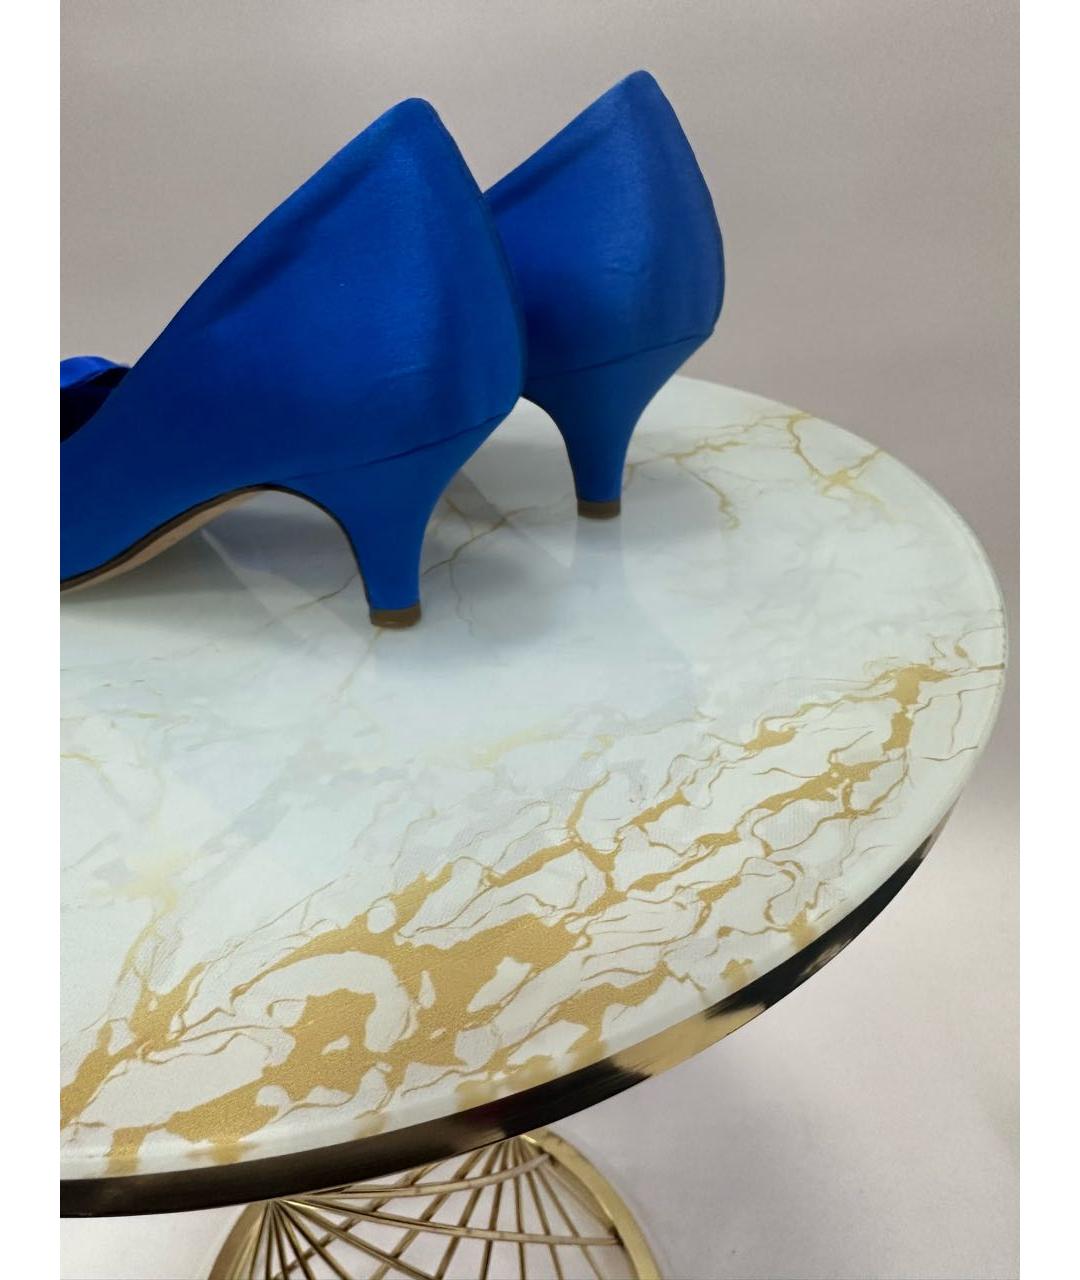 CHANEL PRE-OWNED Синие текстильные туфли, фото 6